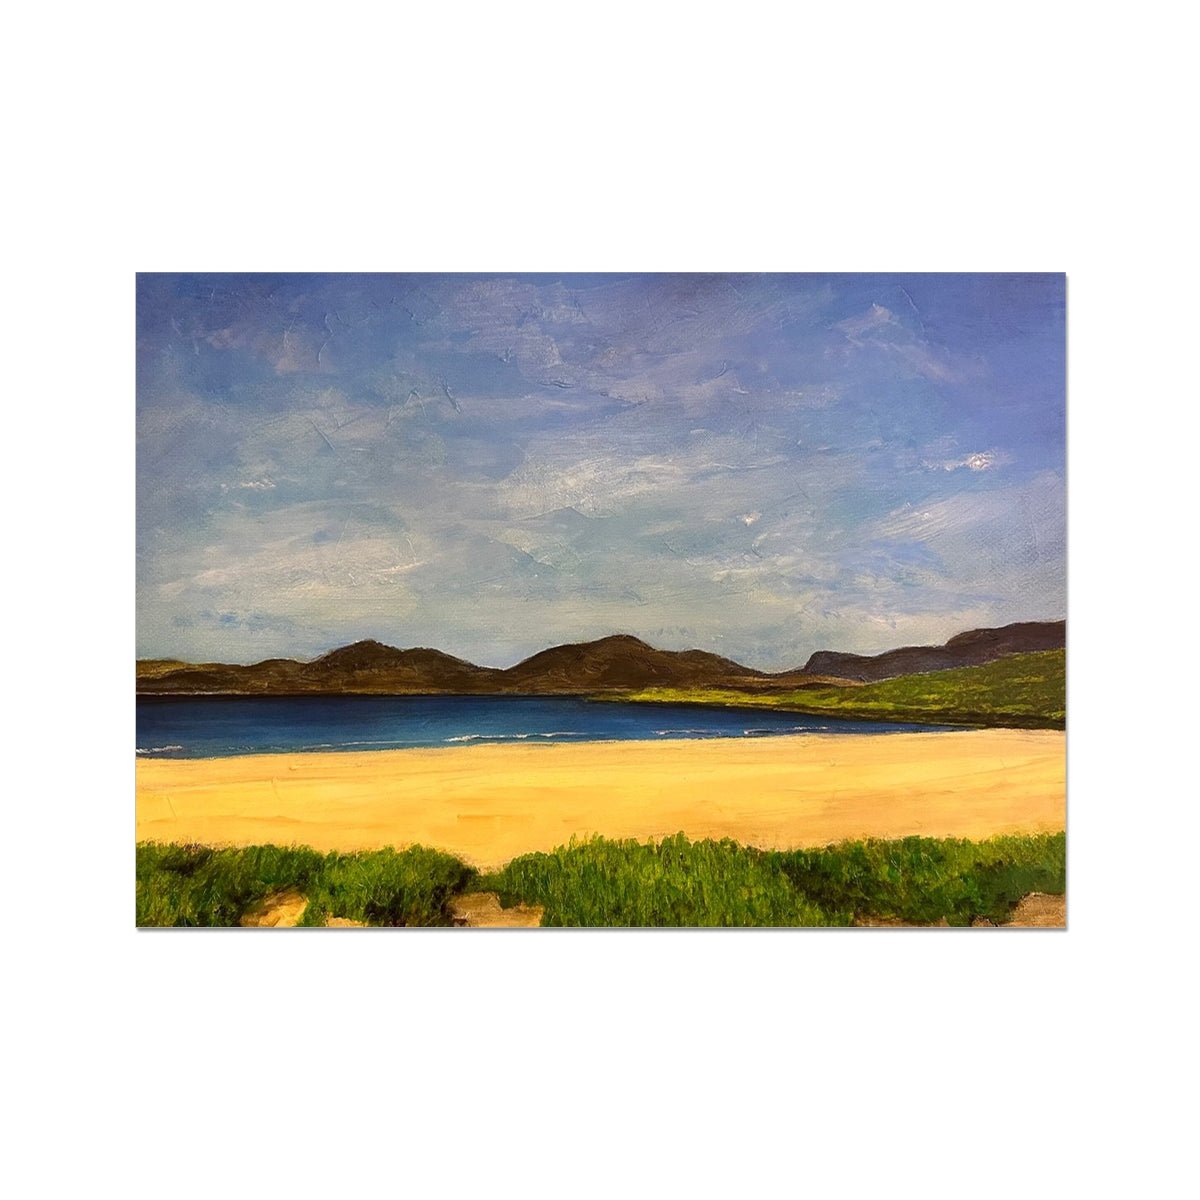 Luskentyre Beach Harris Painting | Fine Art Prints From Scotland-Unframed Prints-Hebridean Islands Art Gallery-A2 Landscape-Paintings, Prints, Homeware, Art Gifts From Scotland By Scottish Artist Kevin Hunter